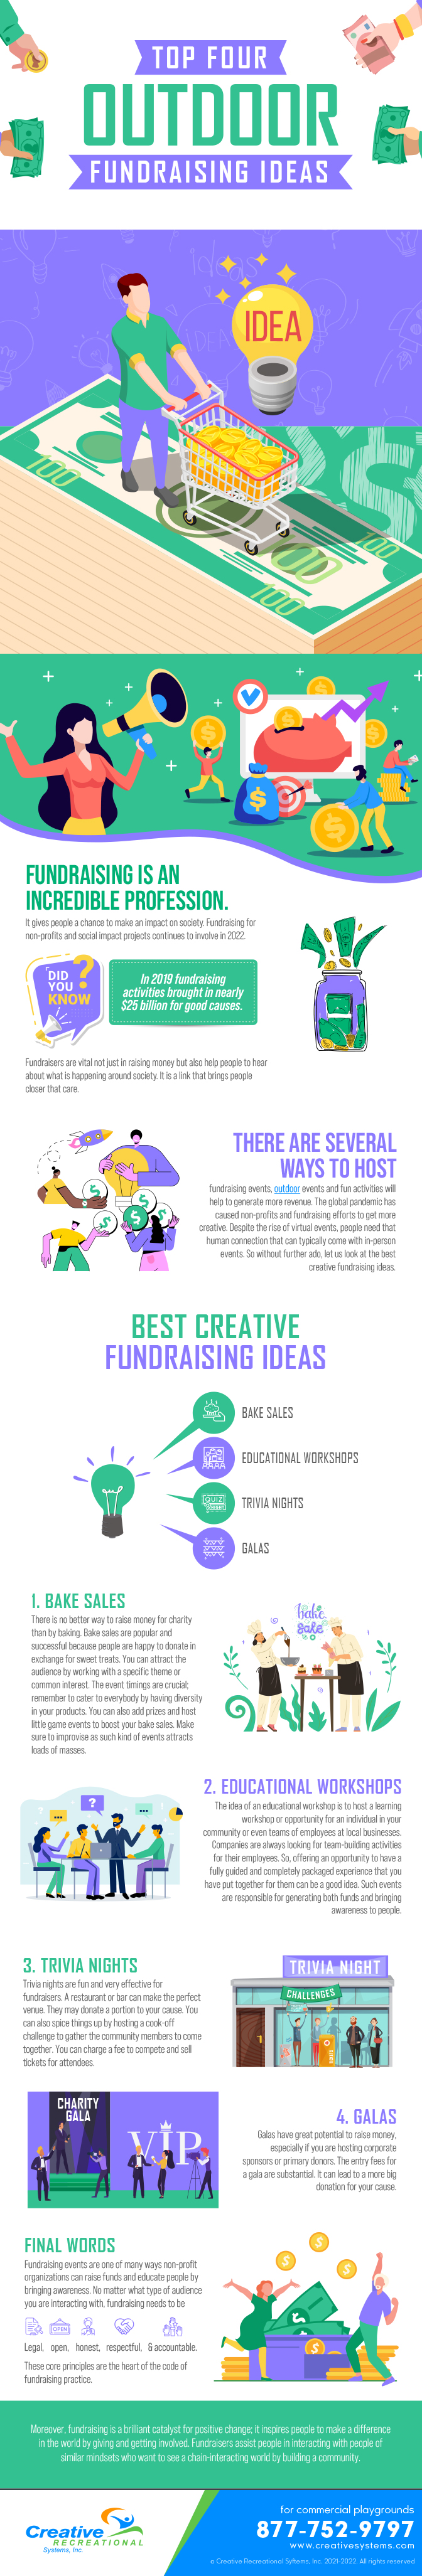 Top-Four-Outdoor-Fundraising-Ideas-52